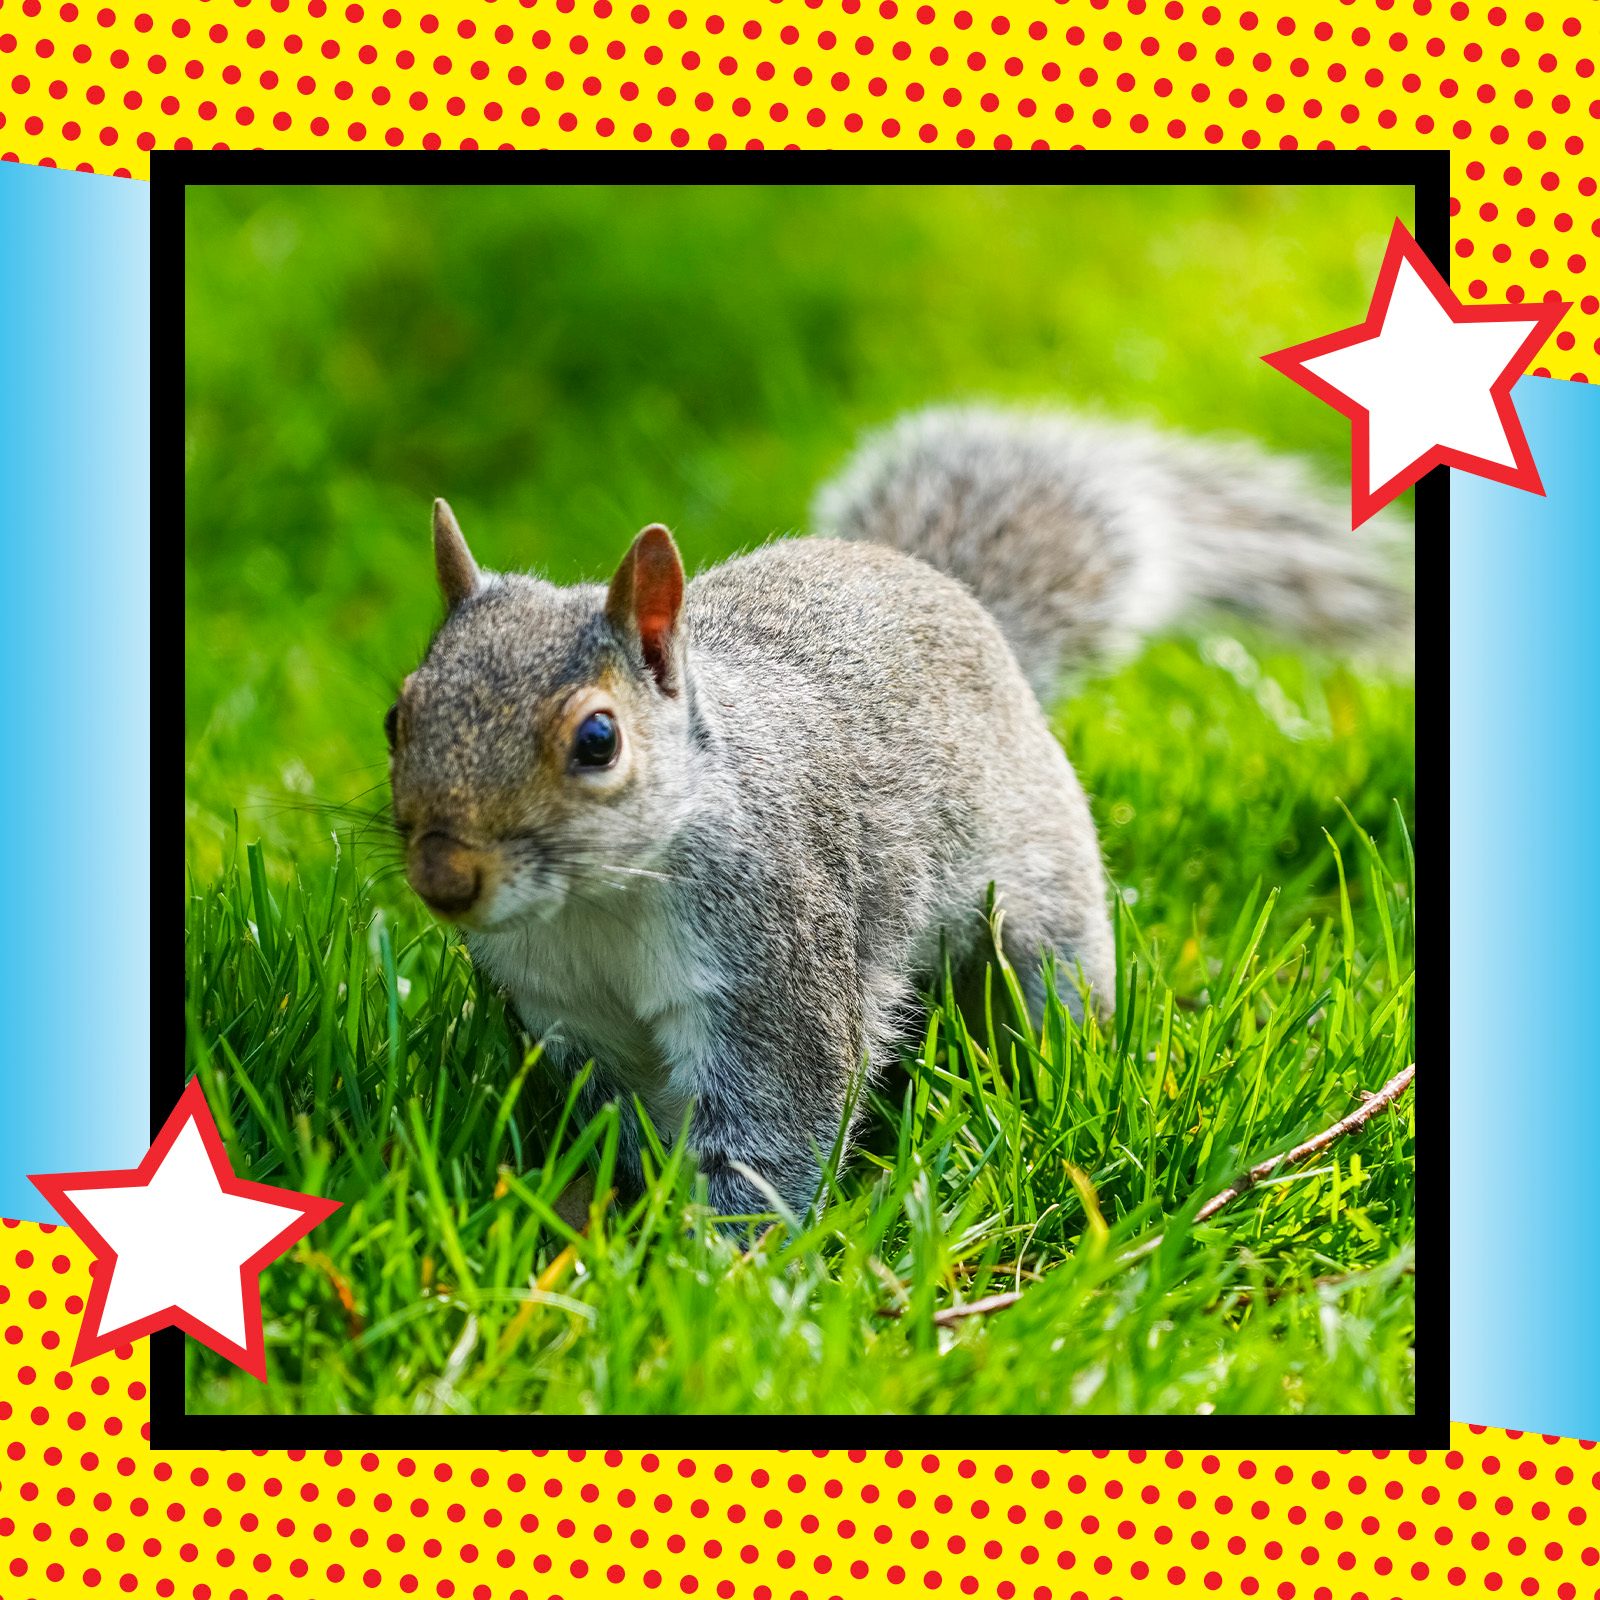 Hero Pets: Pet Squirrel Attacks Intruder, Thwarts Robbery